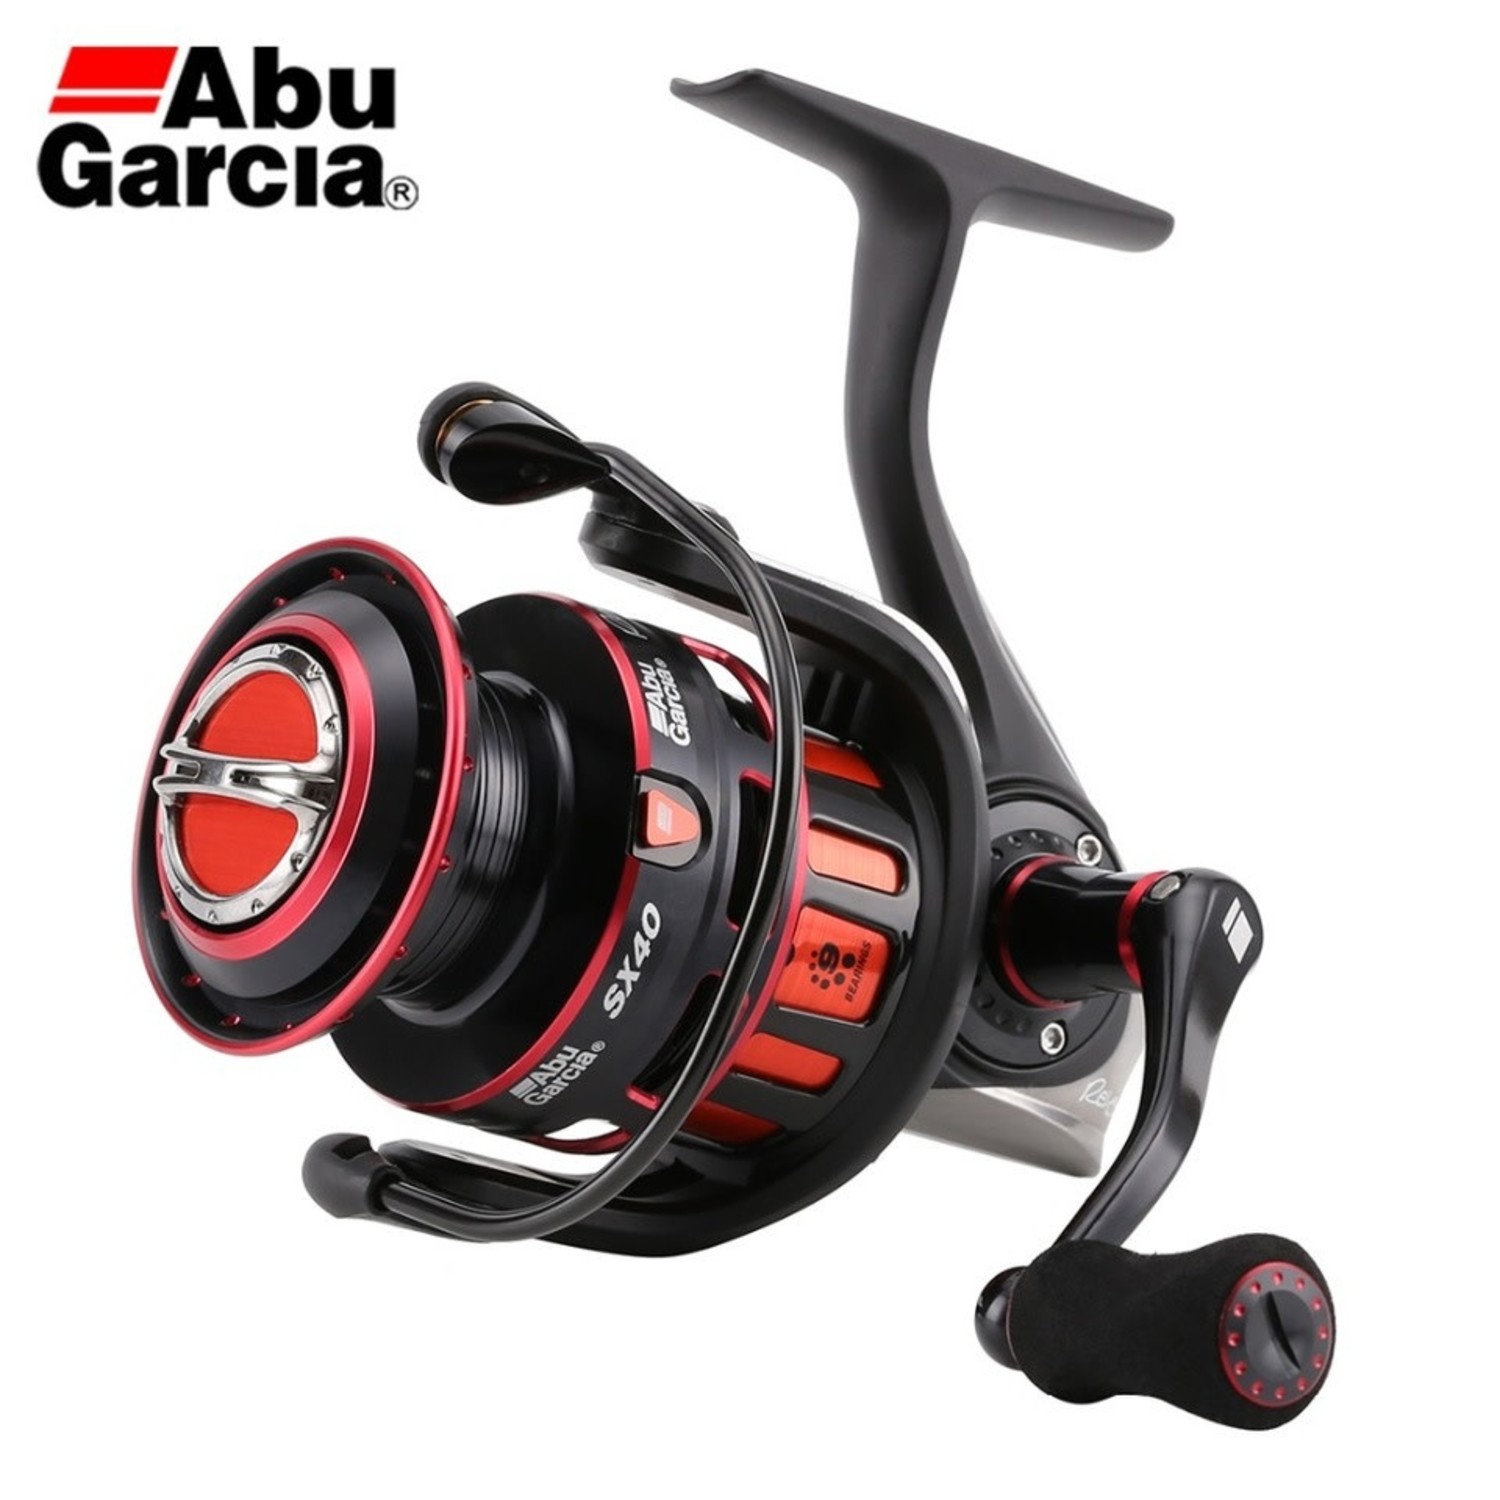 Abu Garcia REVO S 2000 Spin Fishing Reel 